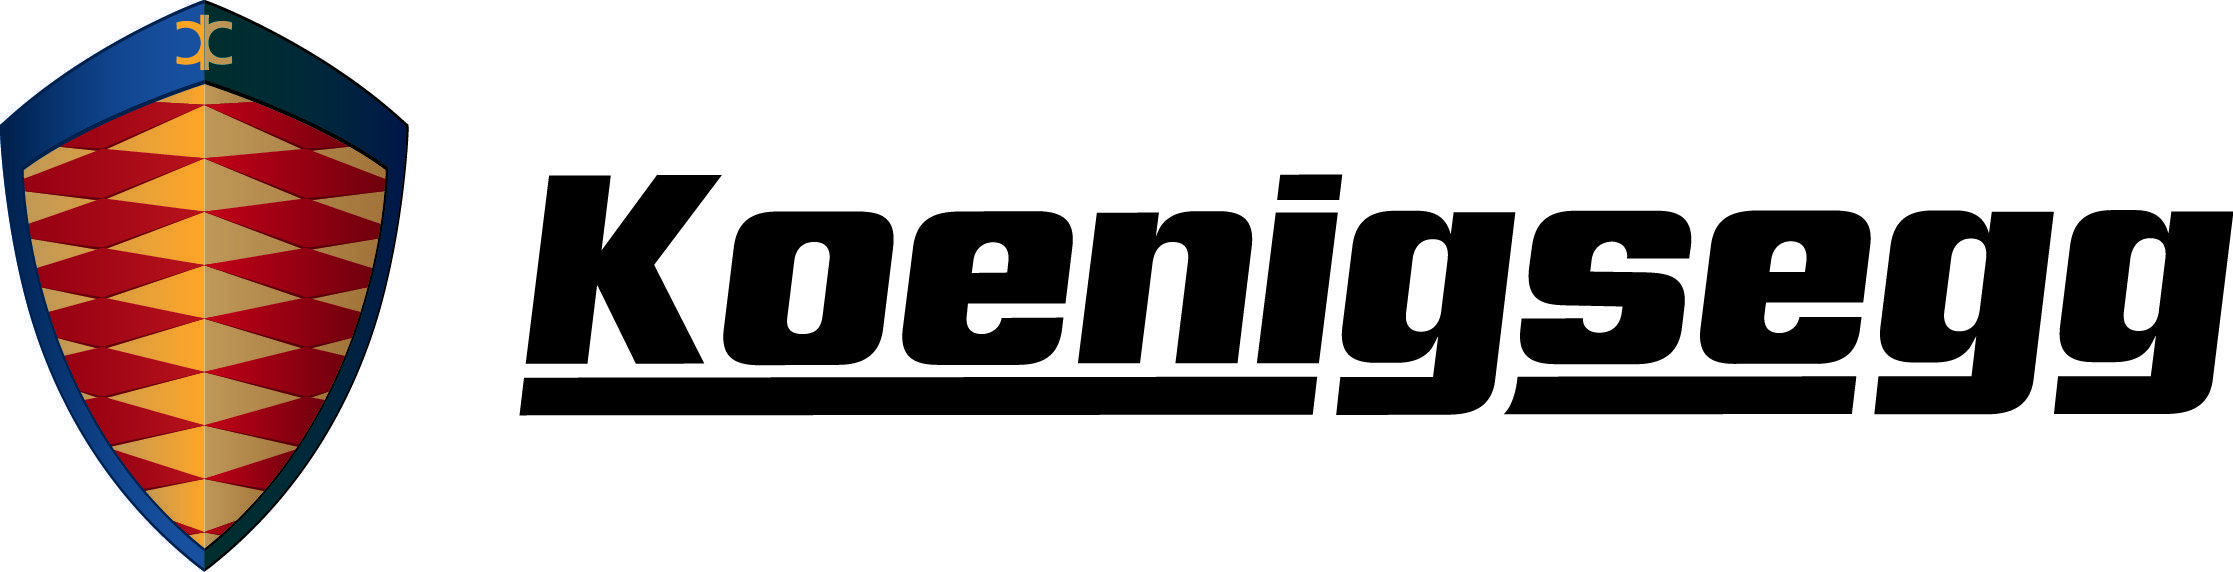 Koenigsegg Ghost Logo - Koenigsegg